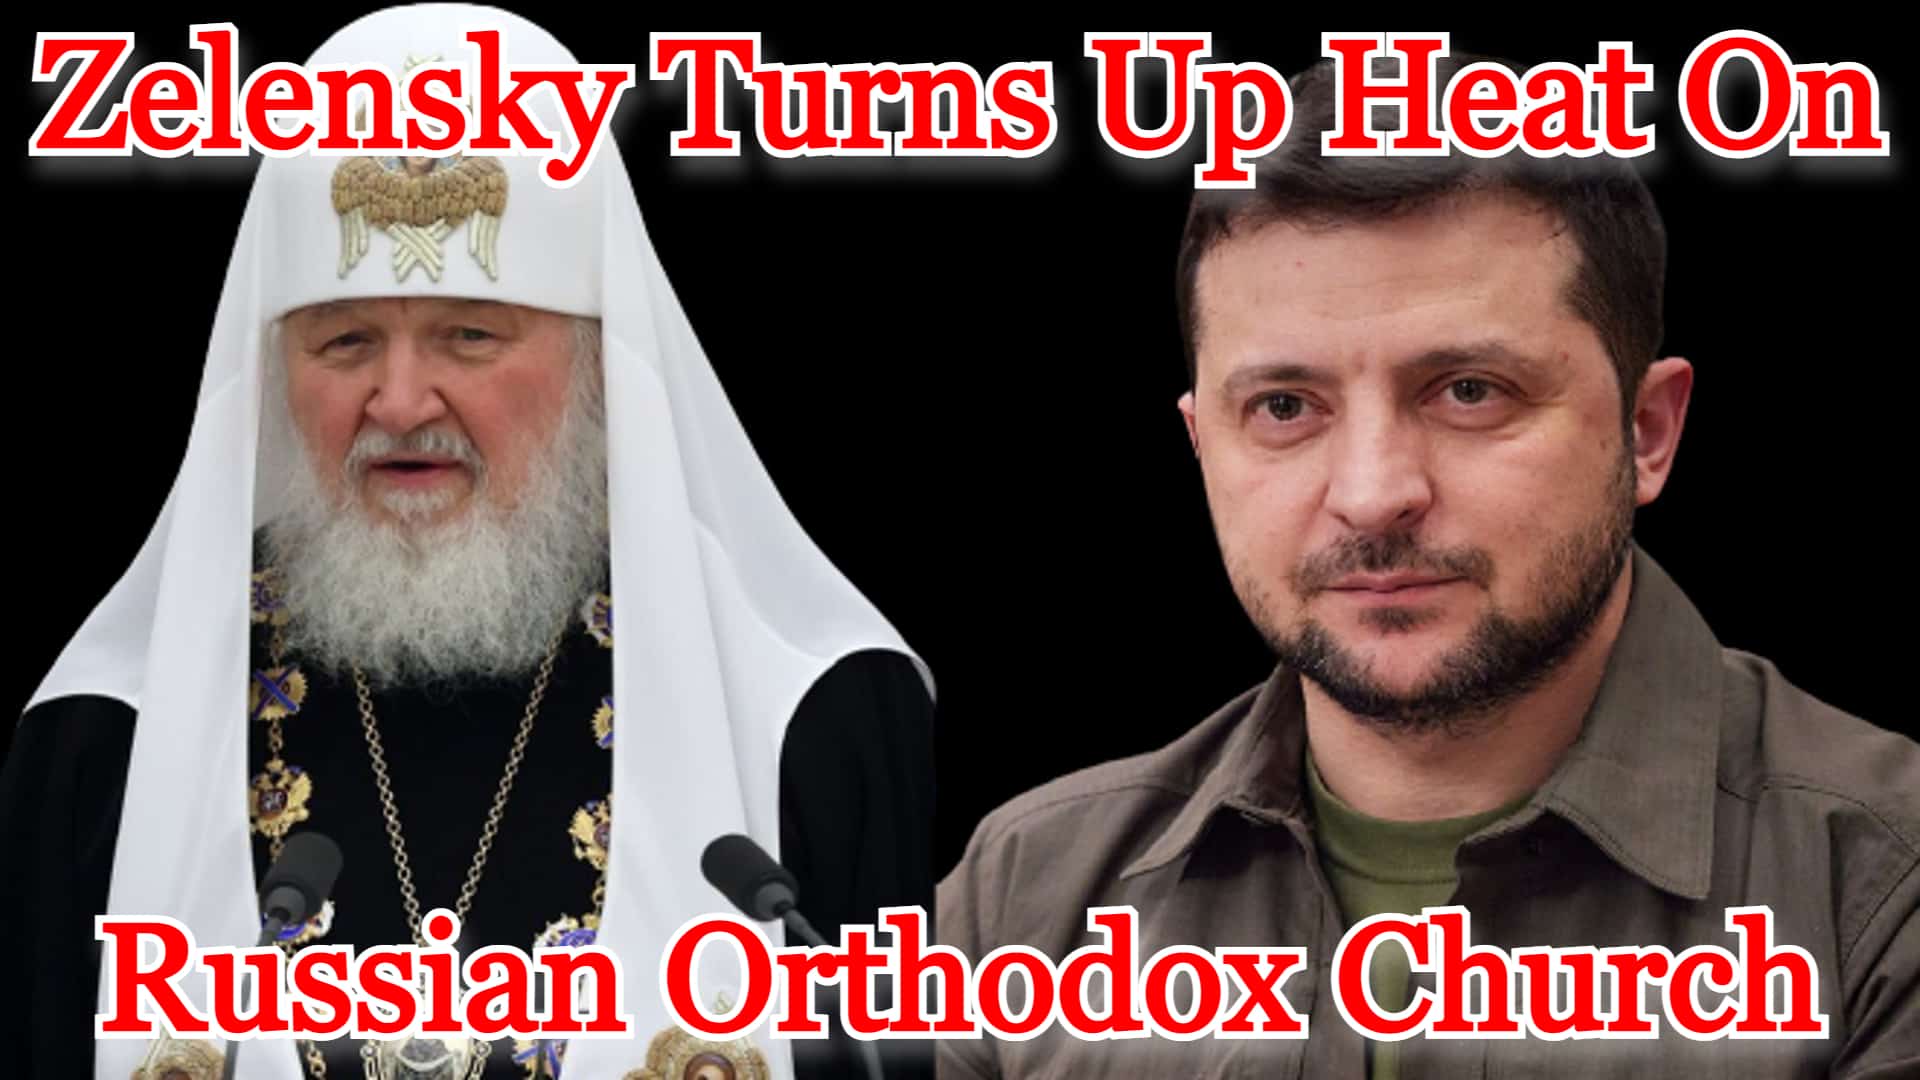 COI #361: Zelensky Turns Up Heat on Russian Orthodox Church